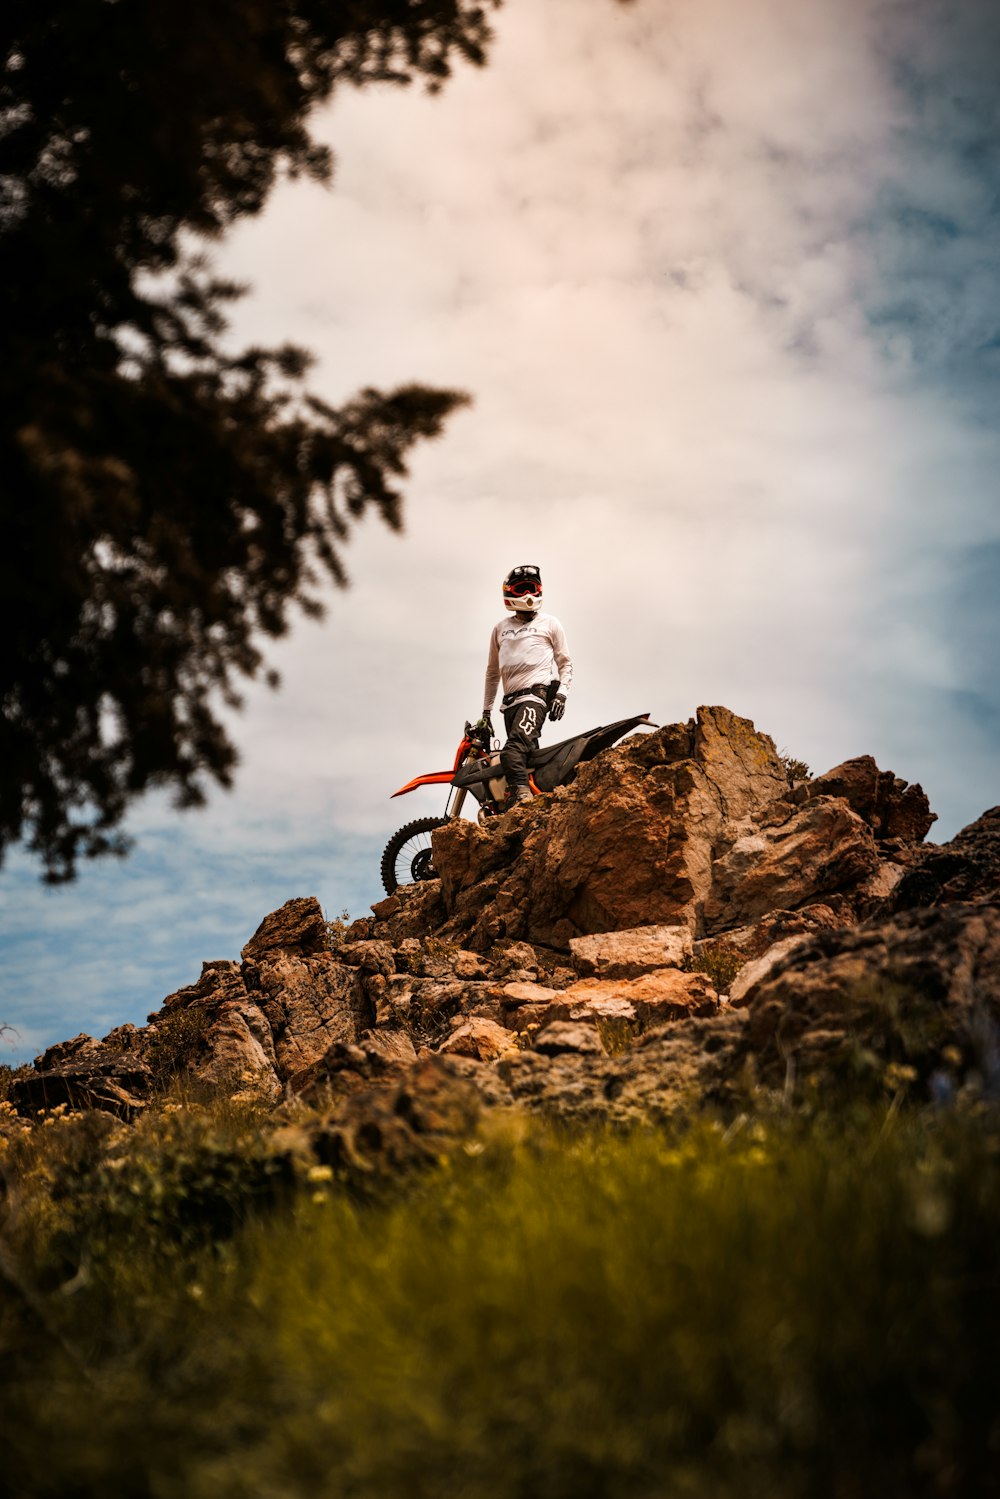 a man riding a dirt bike on top of a rocky hill